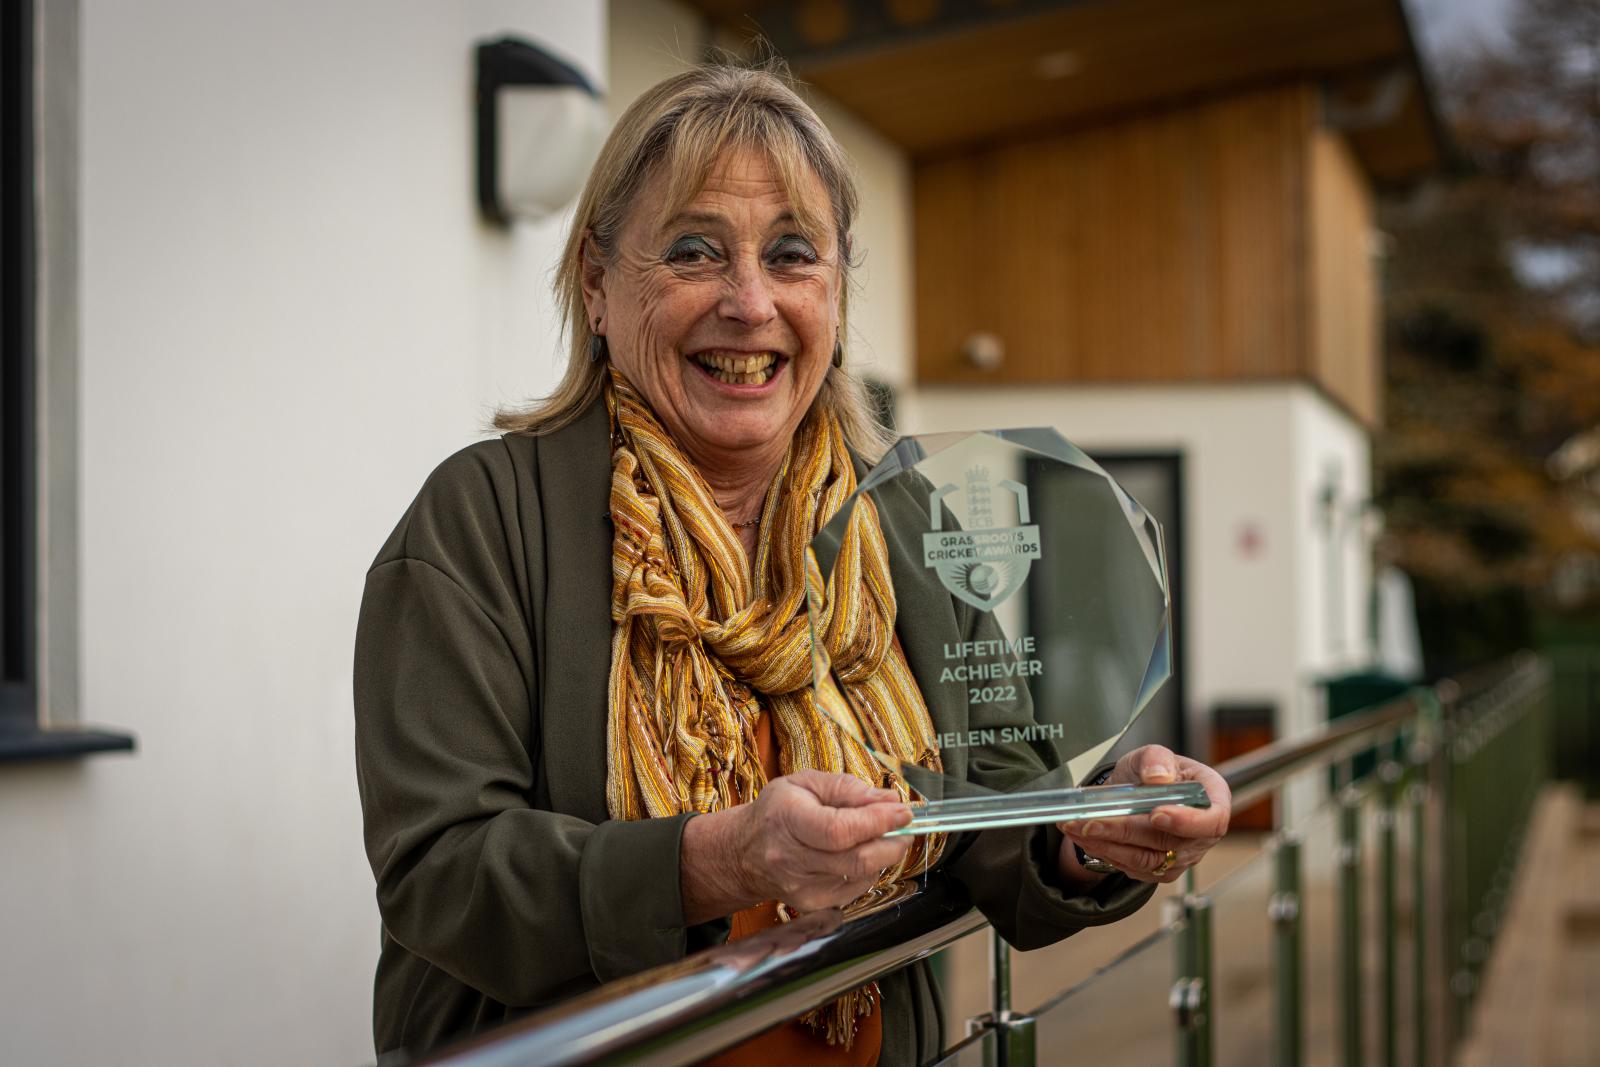 Helen Smith with her ECB Lifetime Achiever Award.